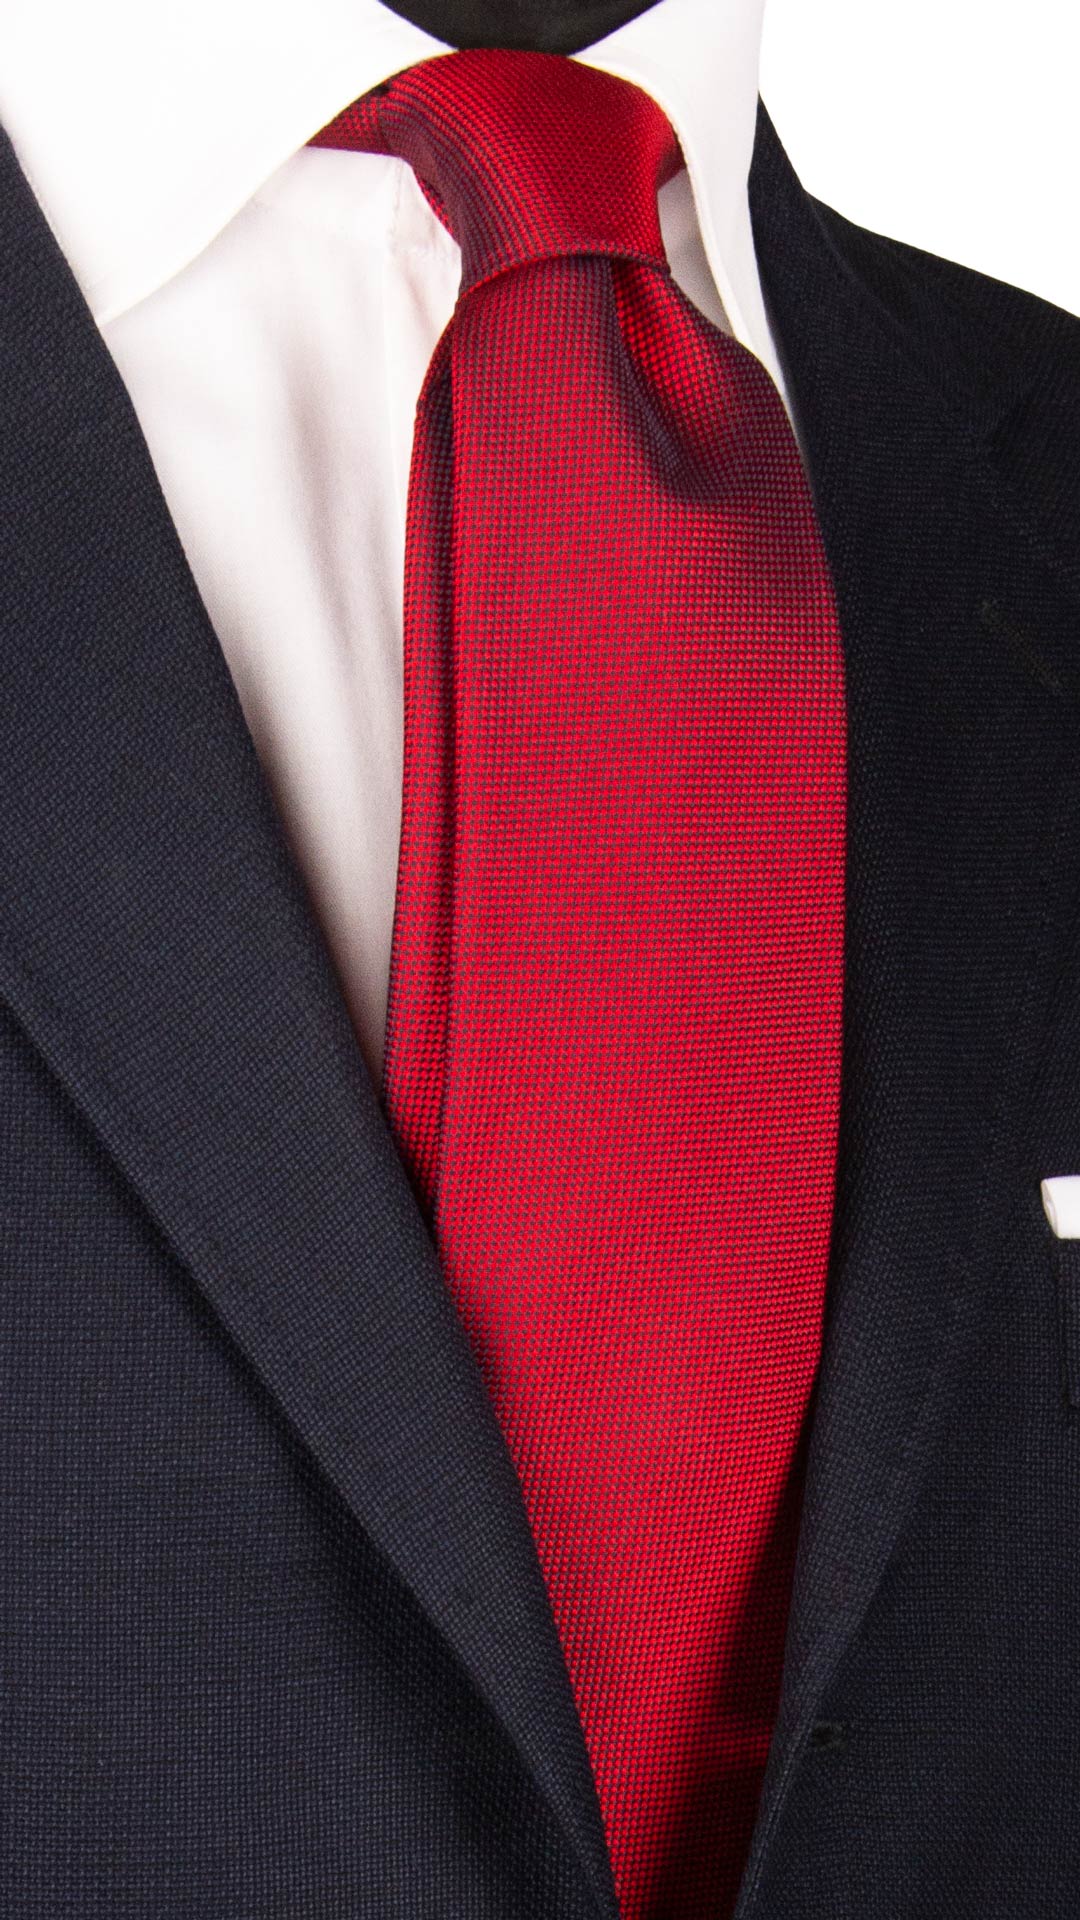 Cravatta di Seta Rossa Tinta Unita 7036 Made in italy Graffeo Cravatte